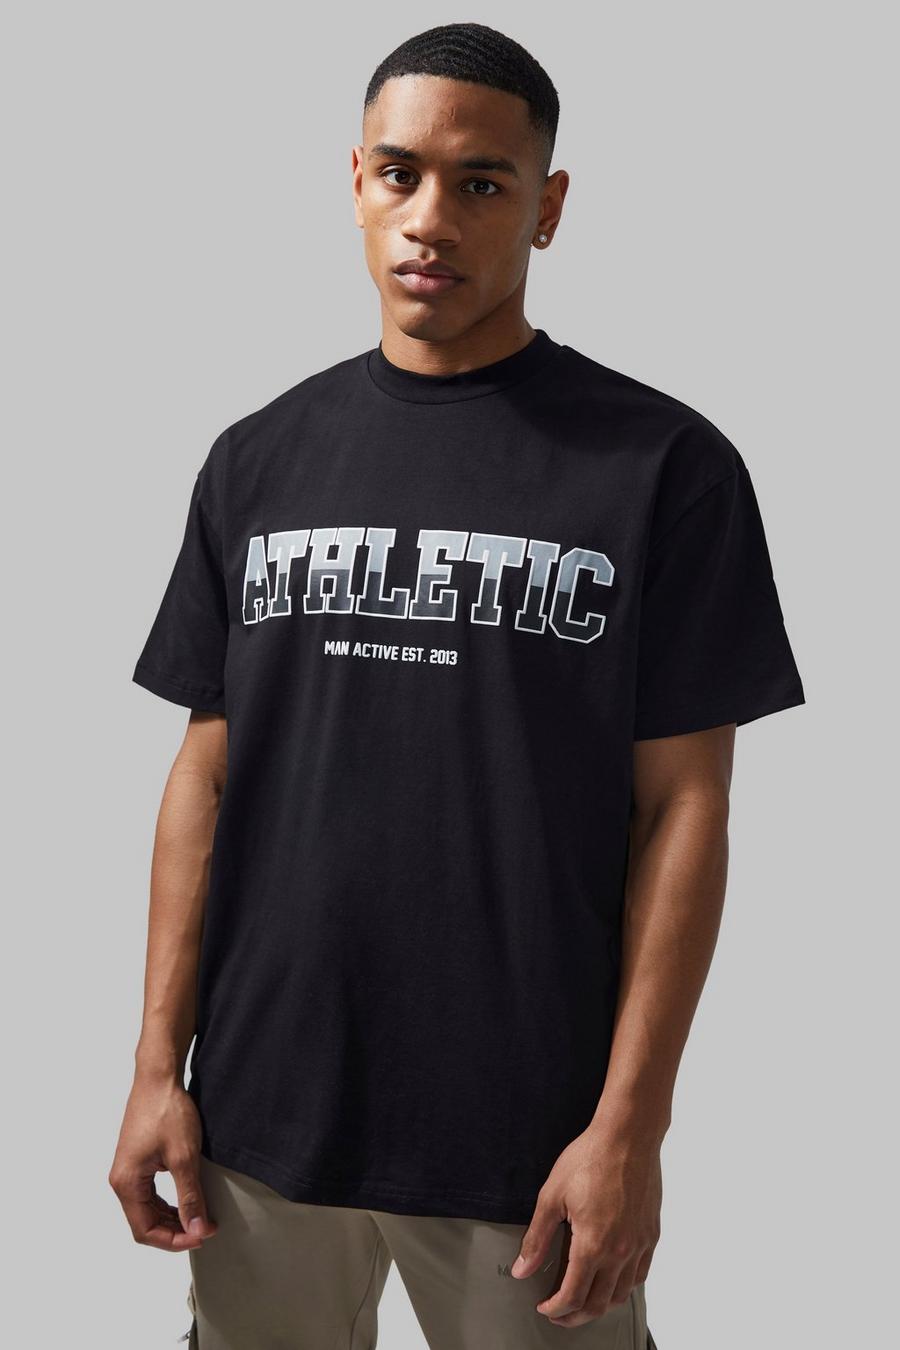 Man Active Gym Oversize T-Shirt mit Athletic Print, Black schwarz